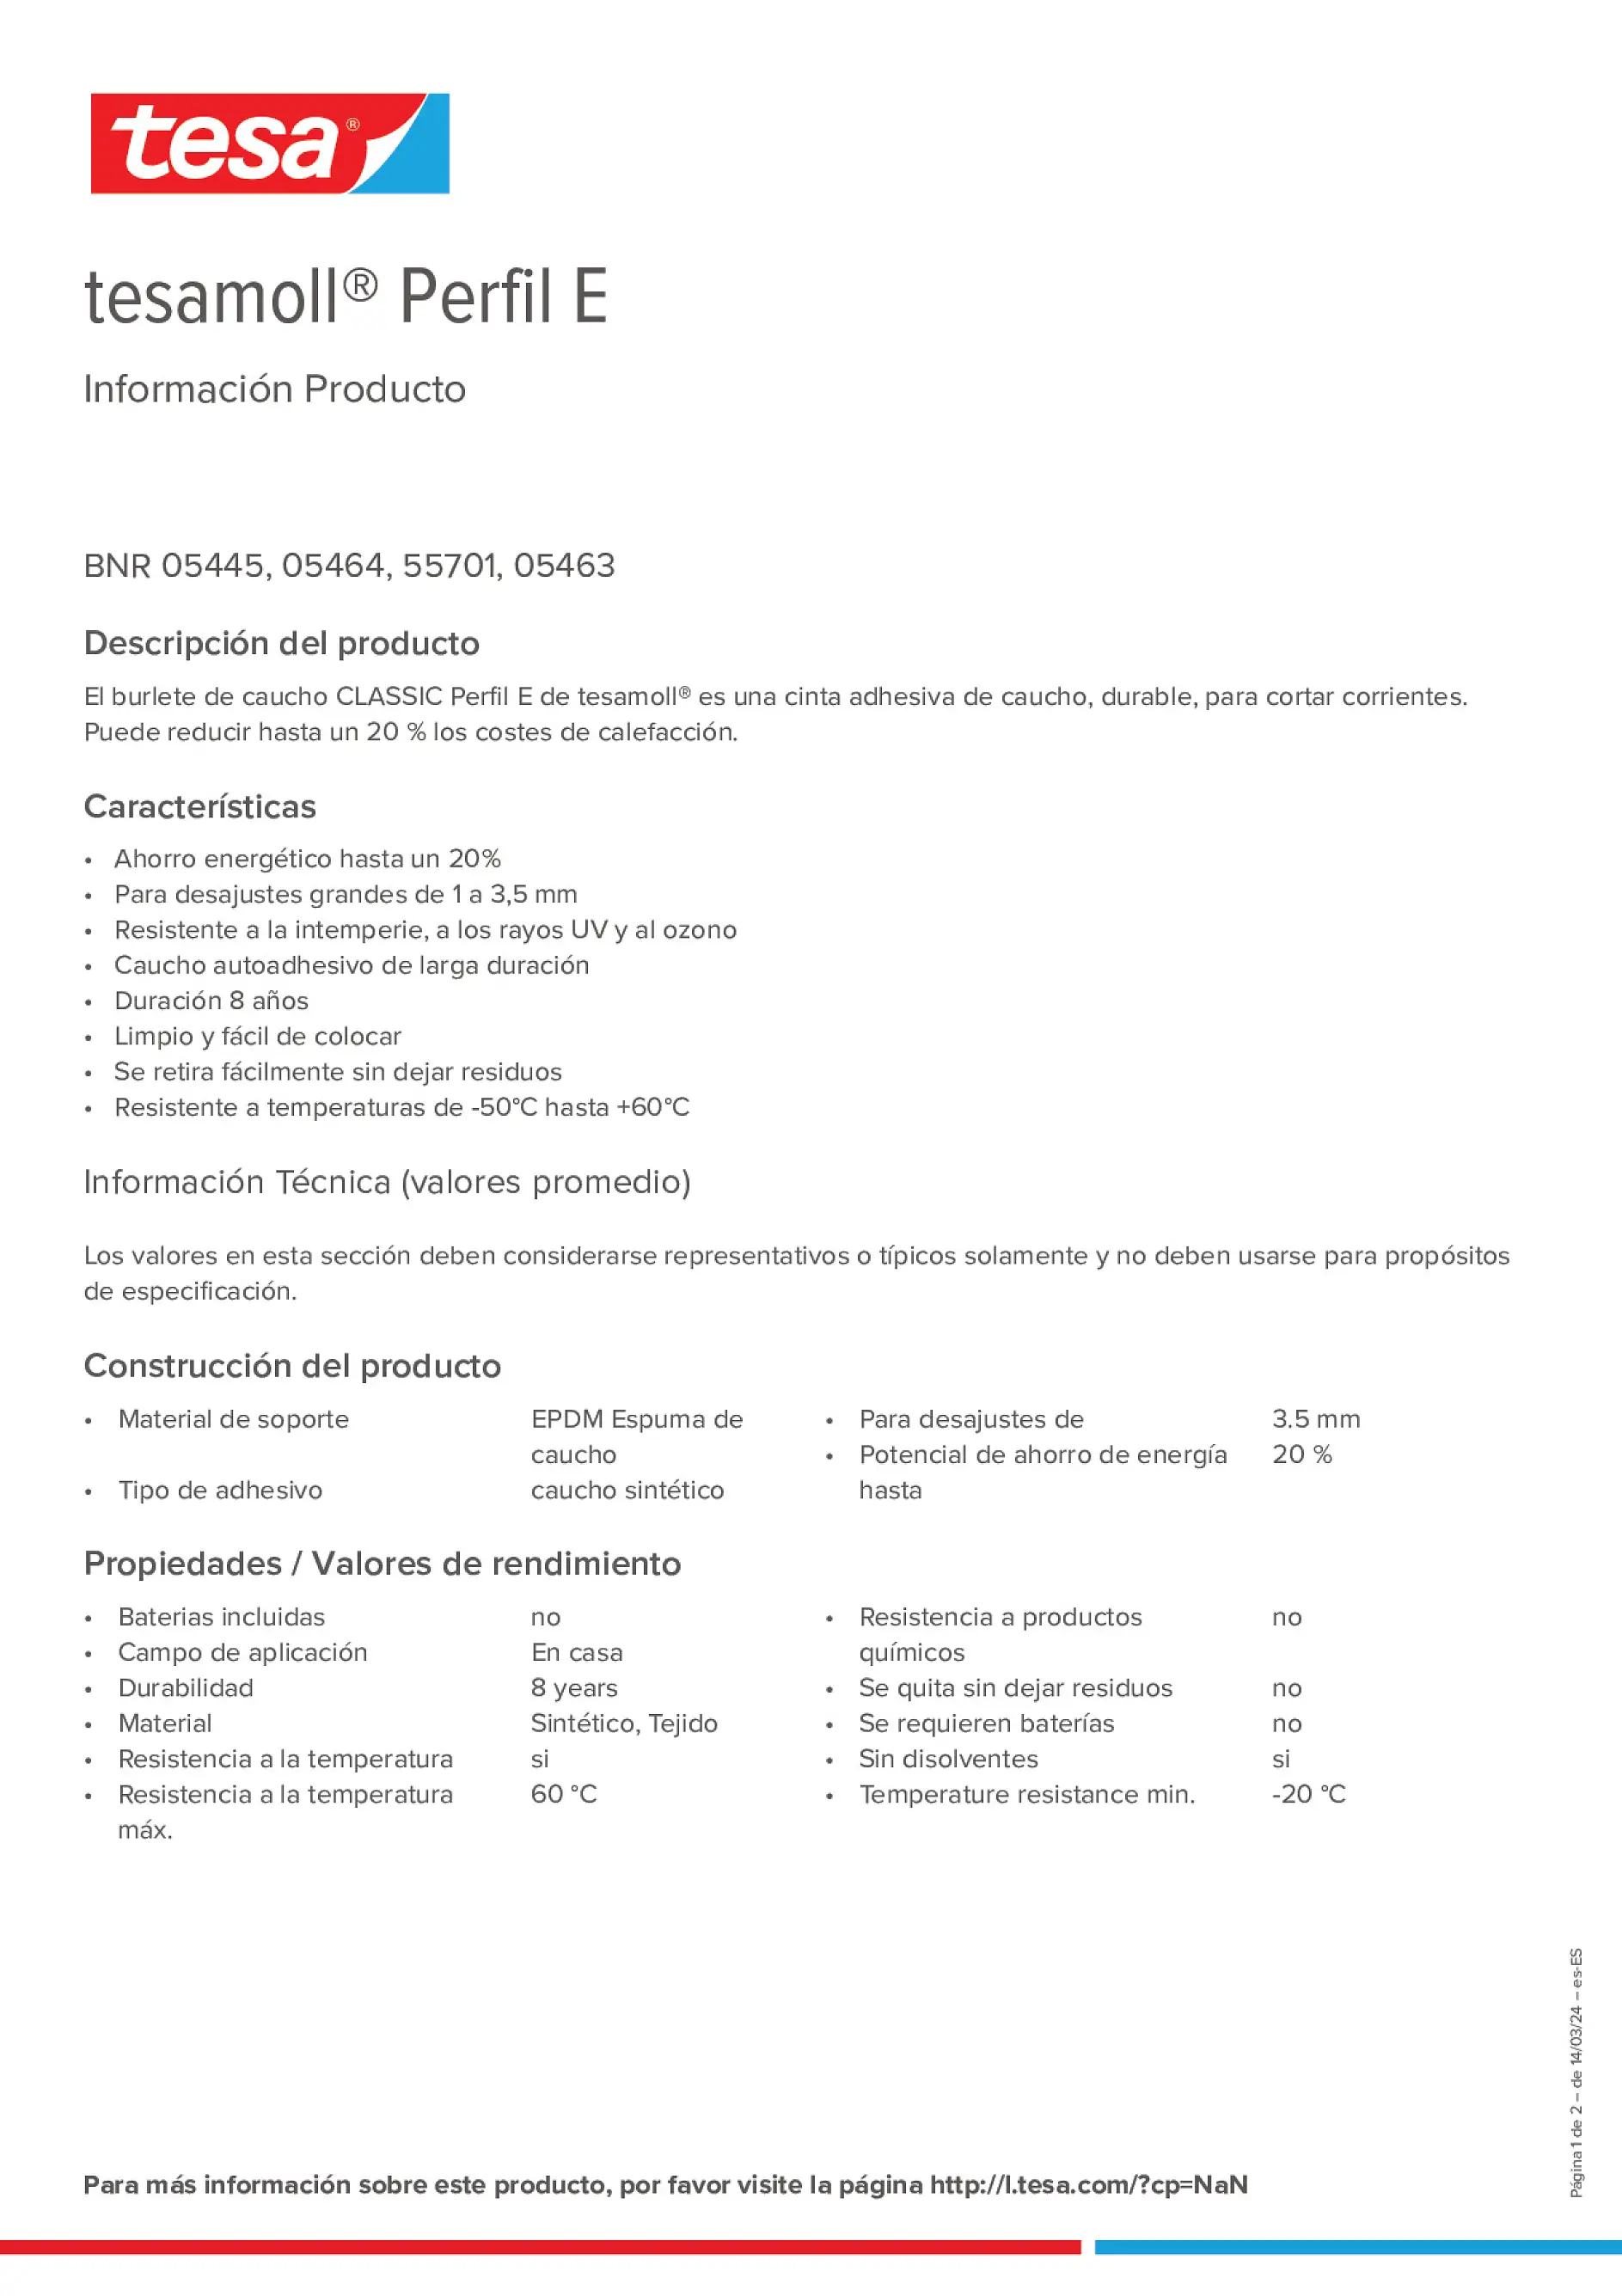 Product information_tesamoll® 5499_es-ES